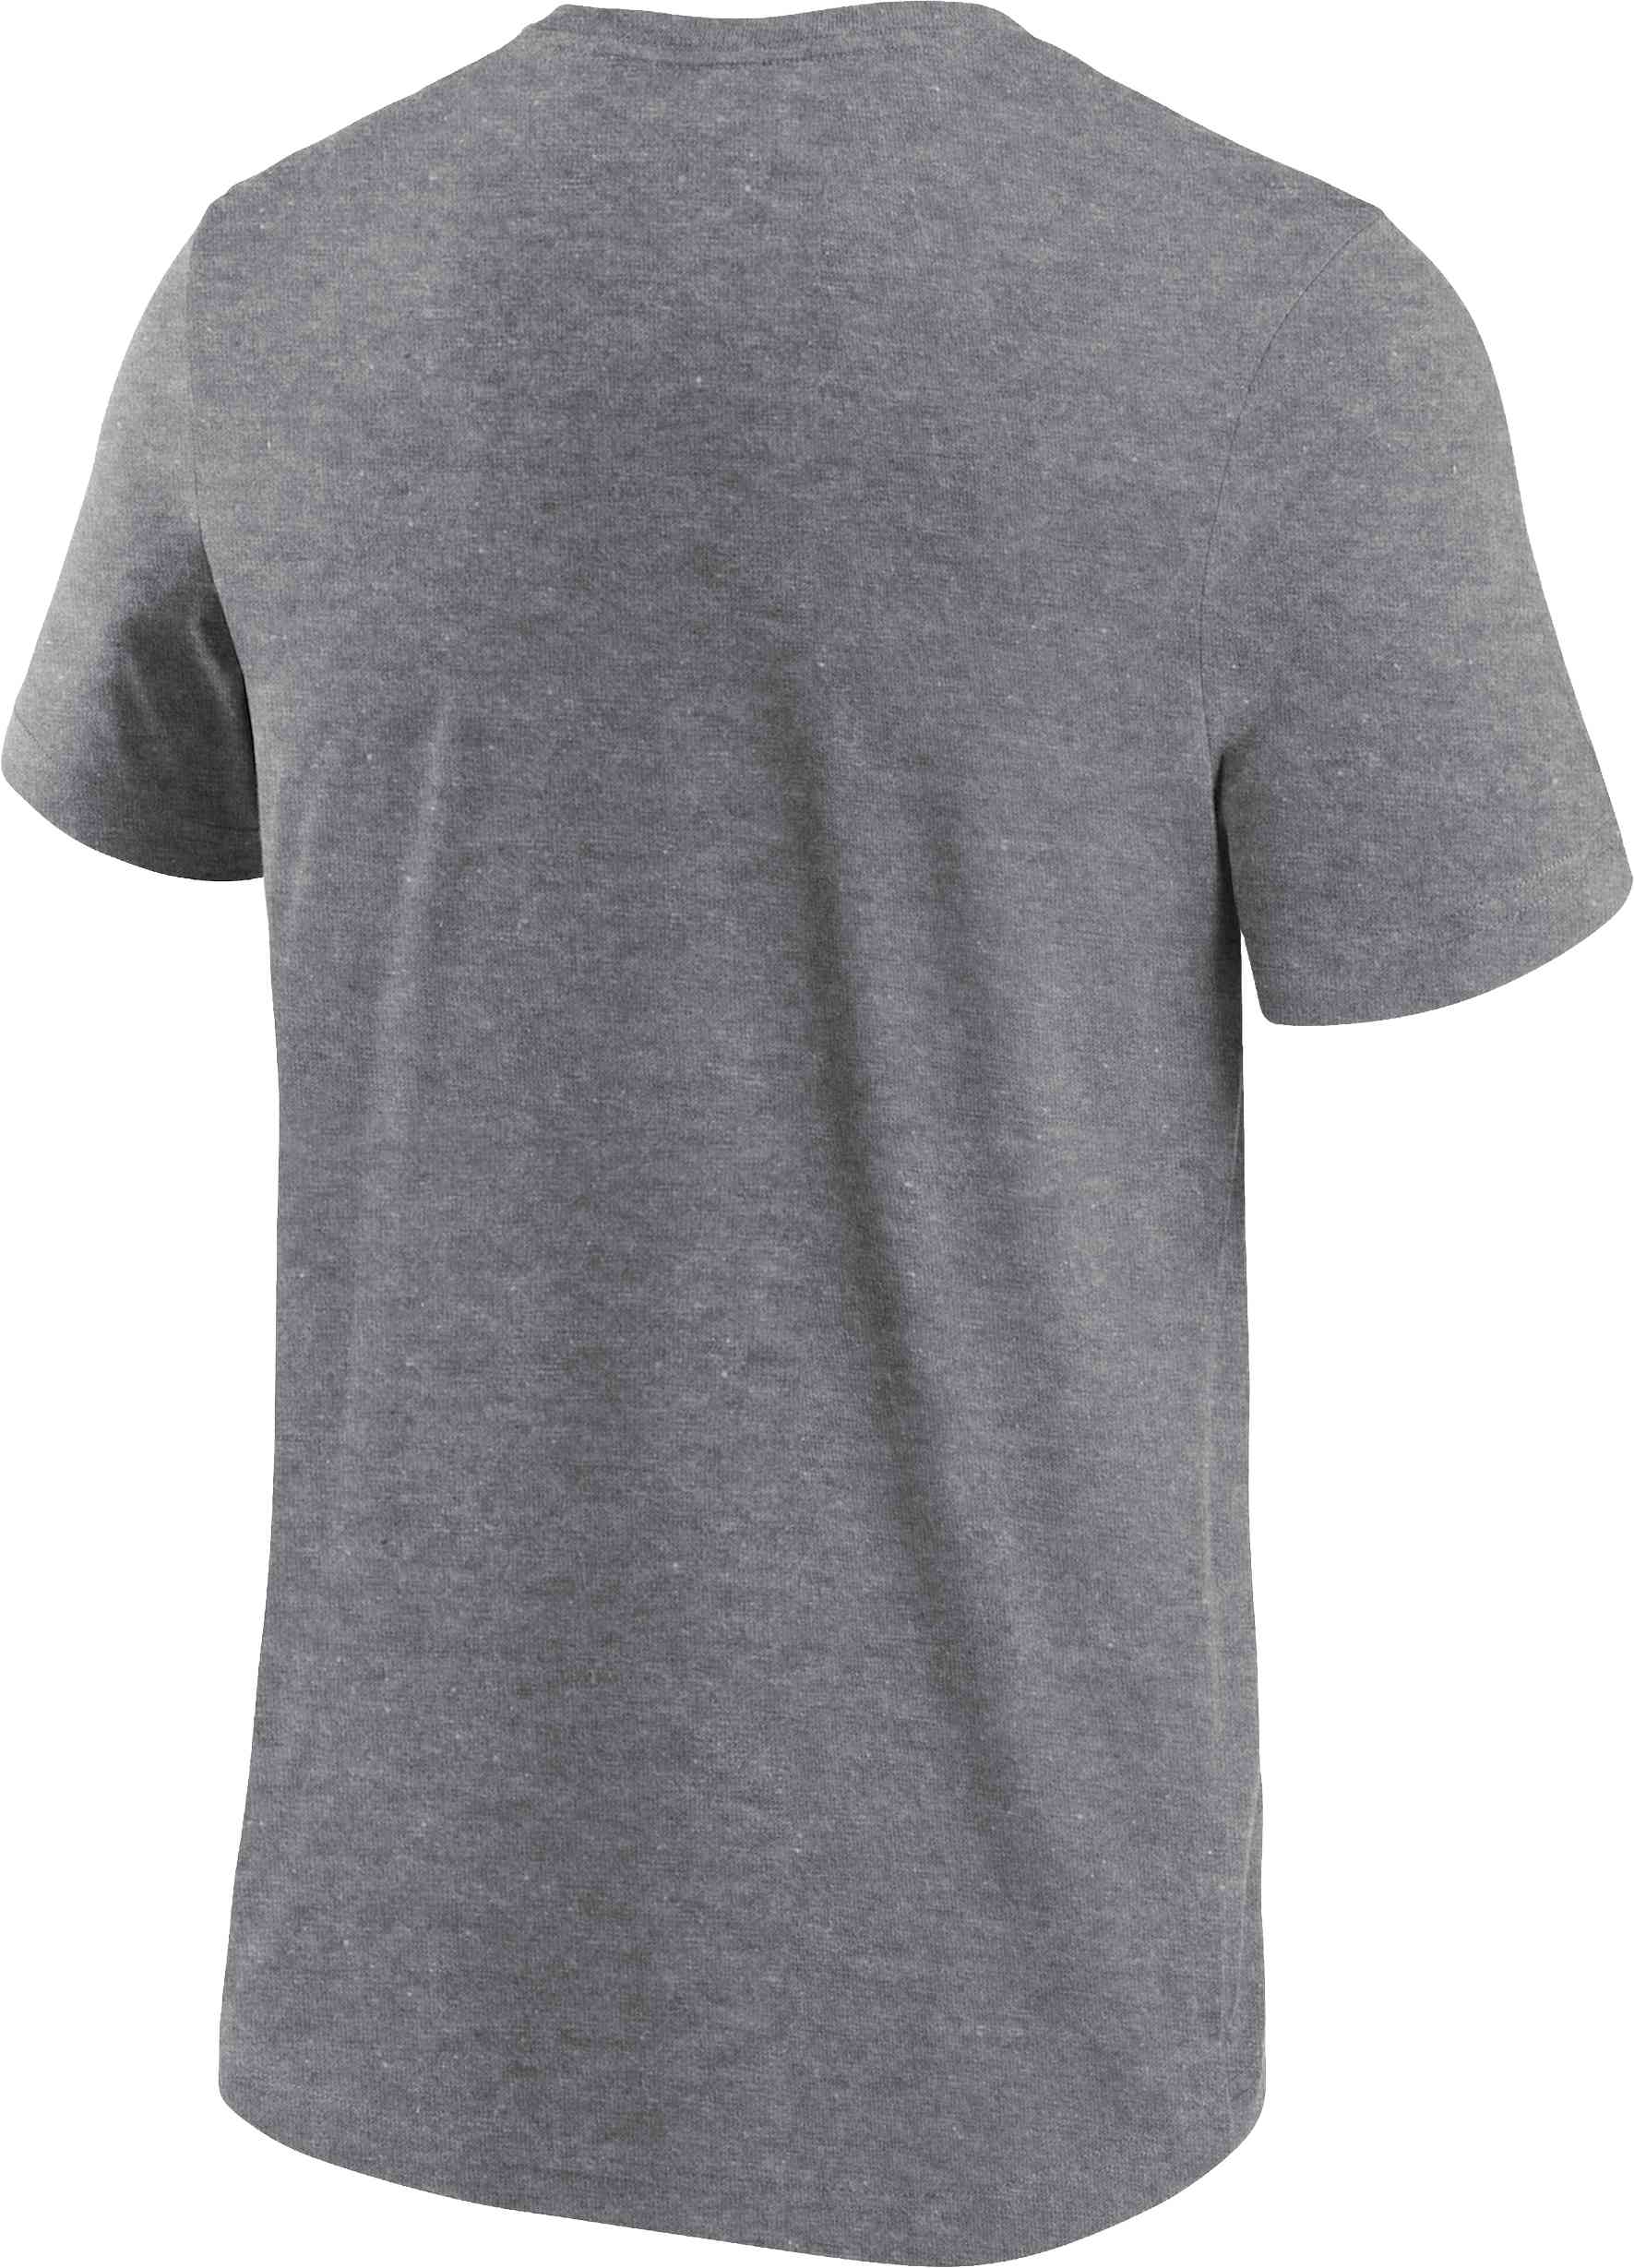 Fanatics - NFL Tennessee Titans Primary Logo Graphic T-Shirt